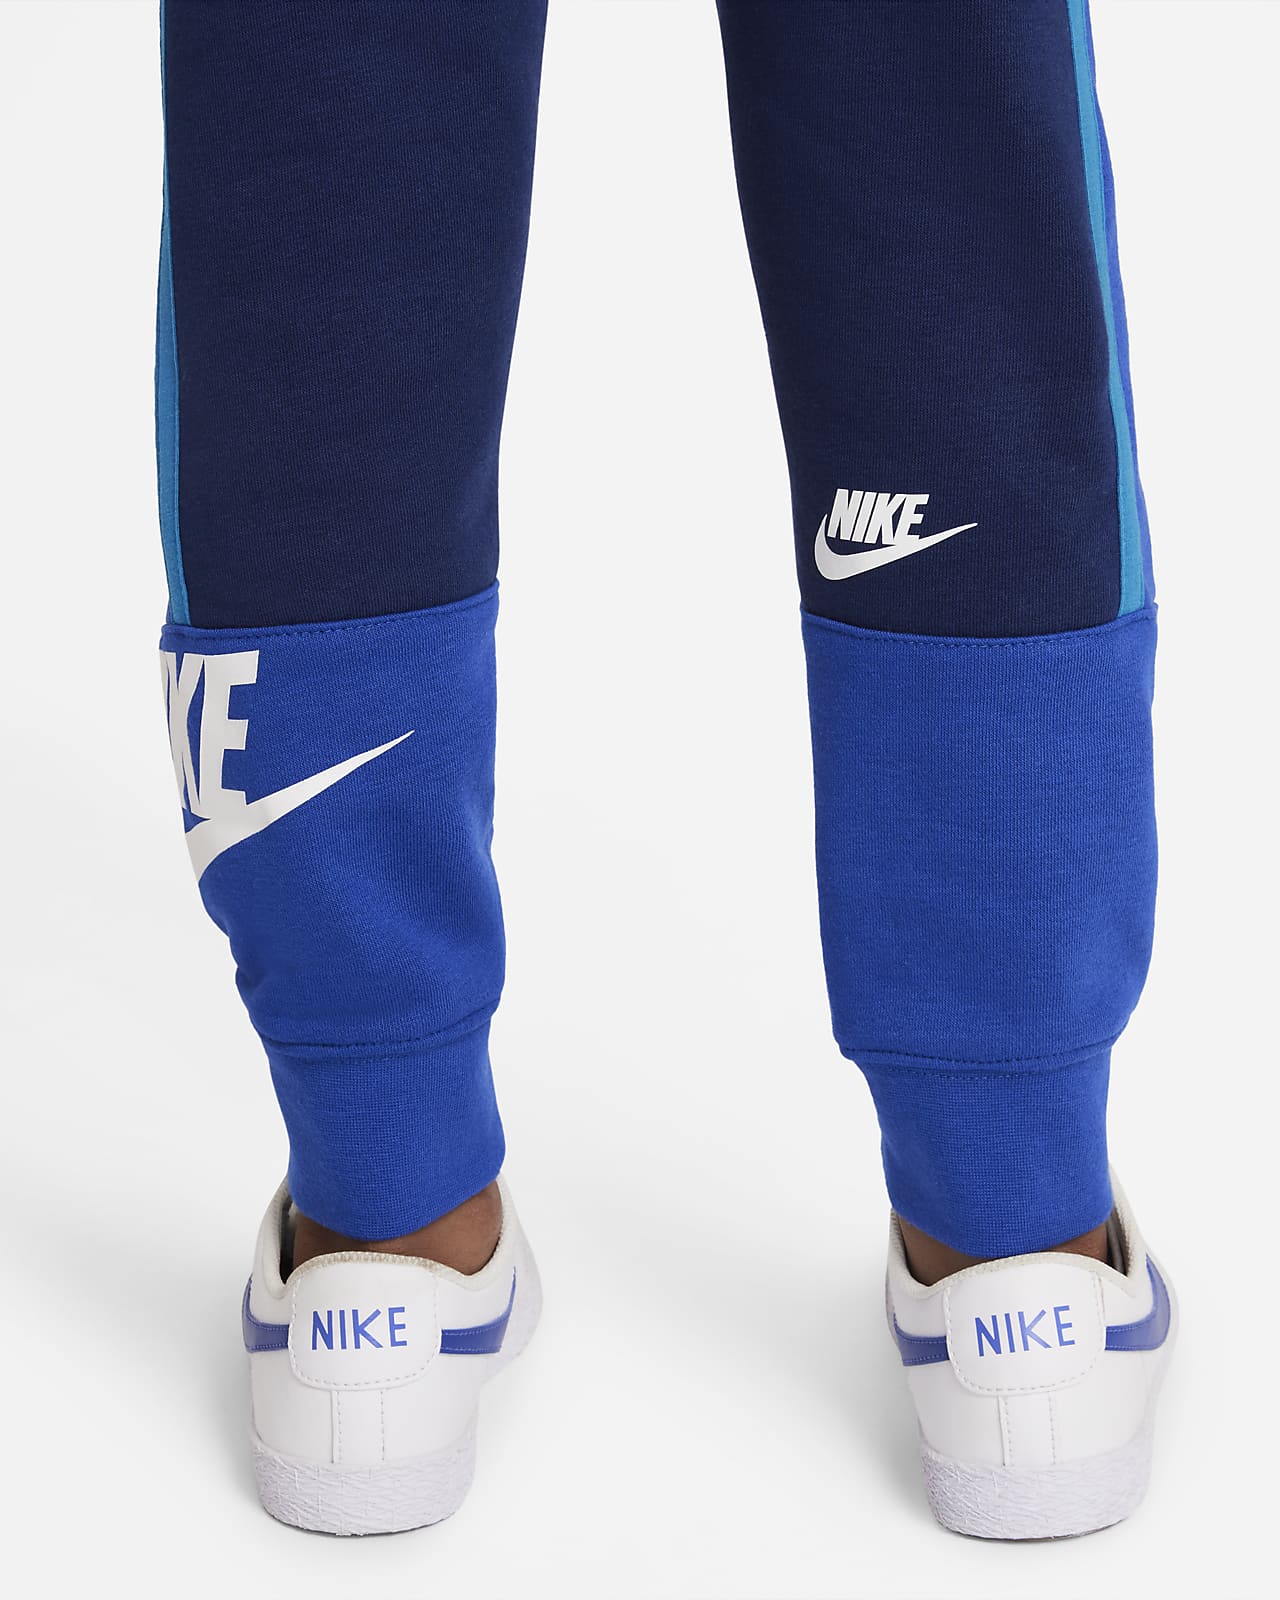 Desafortunadamente Enojado Latón Pantalones Nike para niños talla pequeña. Nike.com